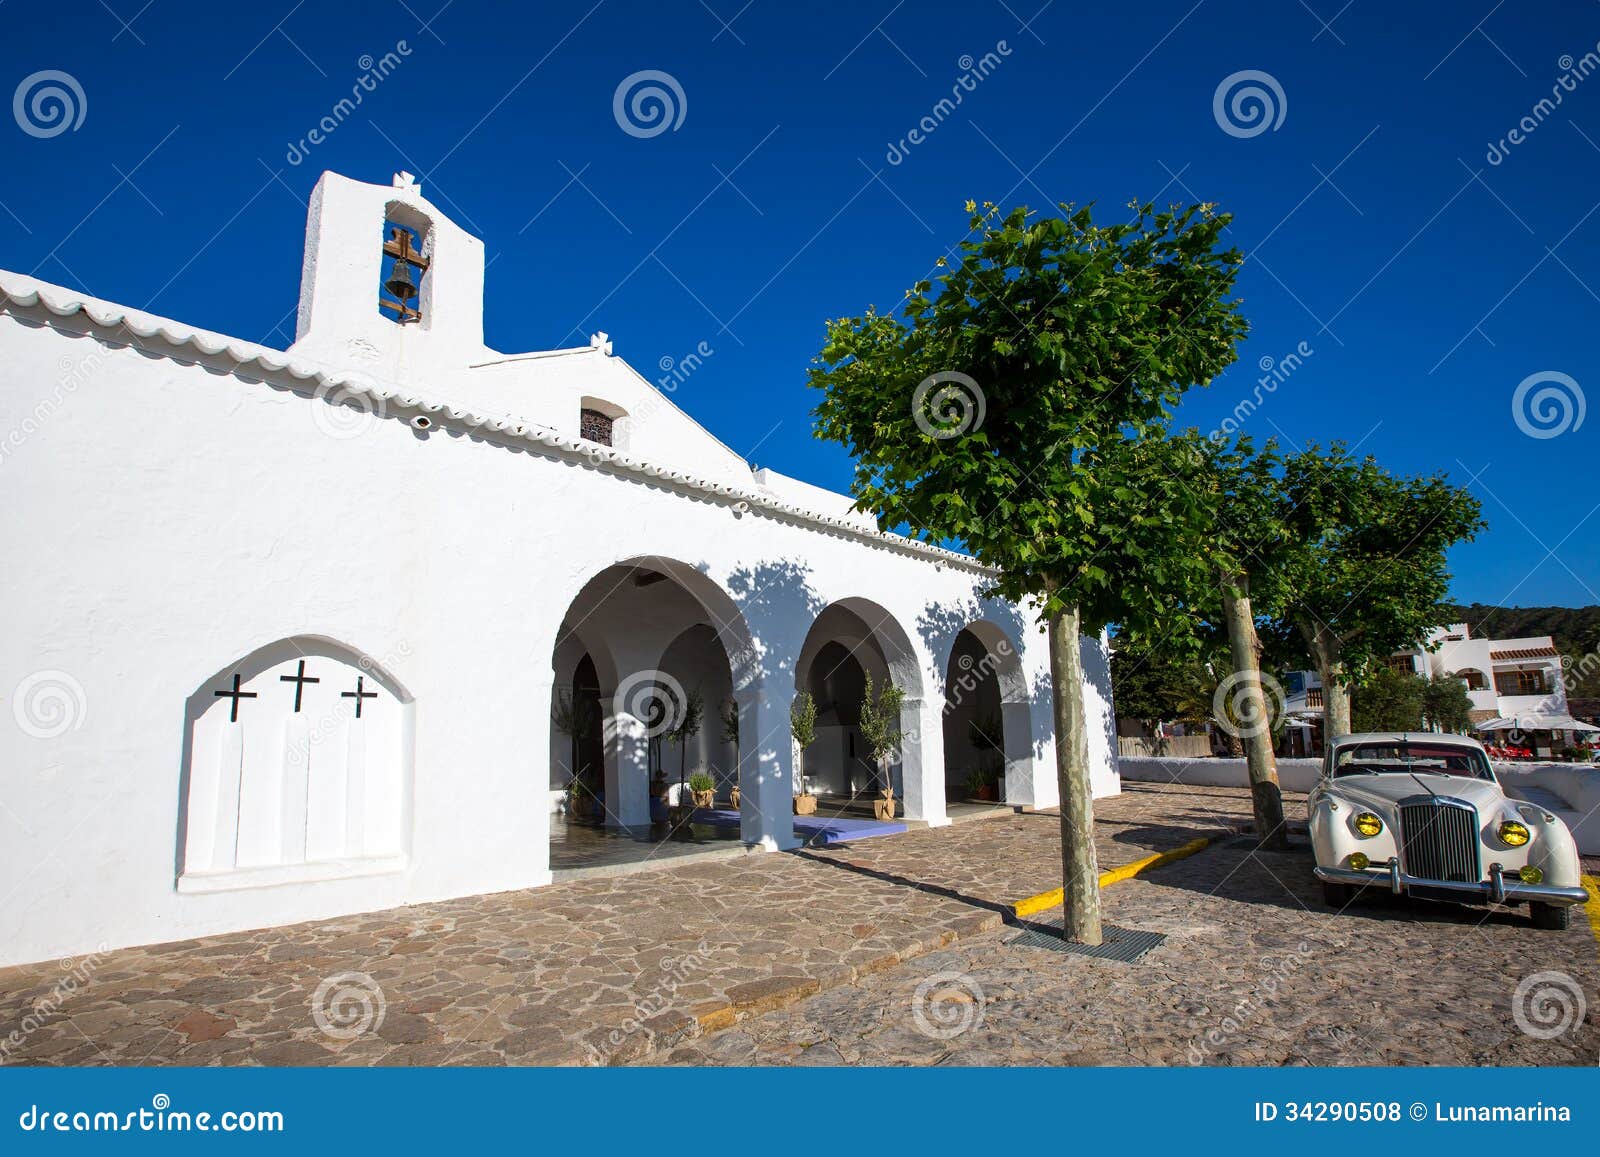 ibiza sant carles de peralta white church in balearic